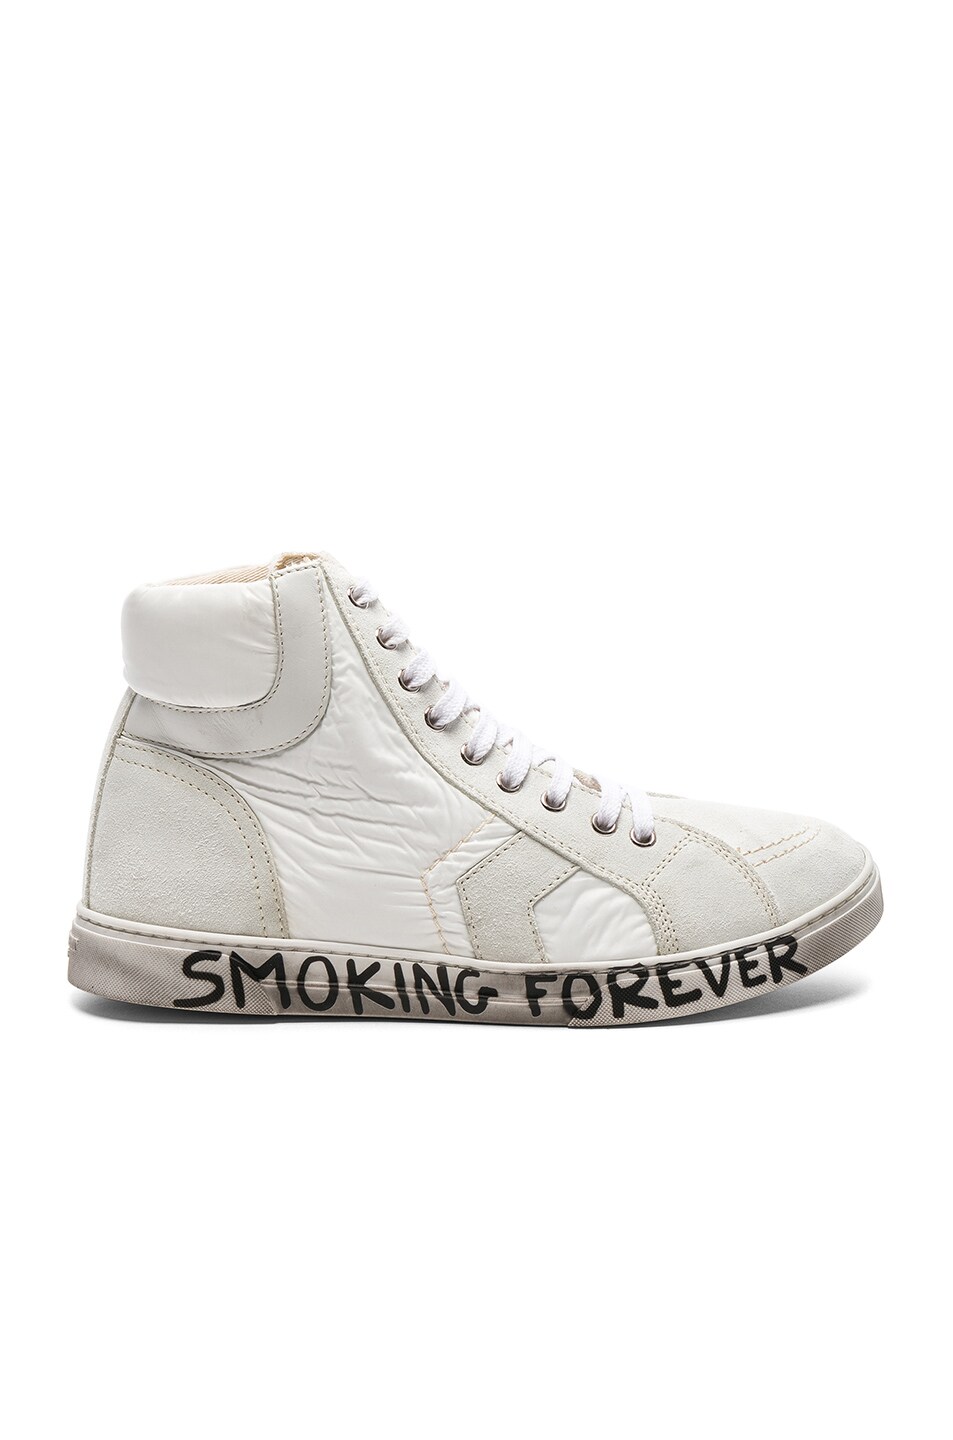 Shop Saint Laurent Smoking Forever High 